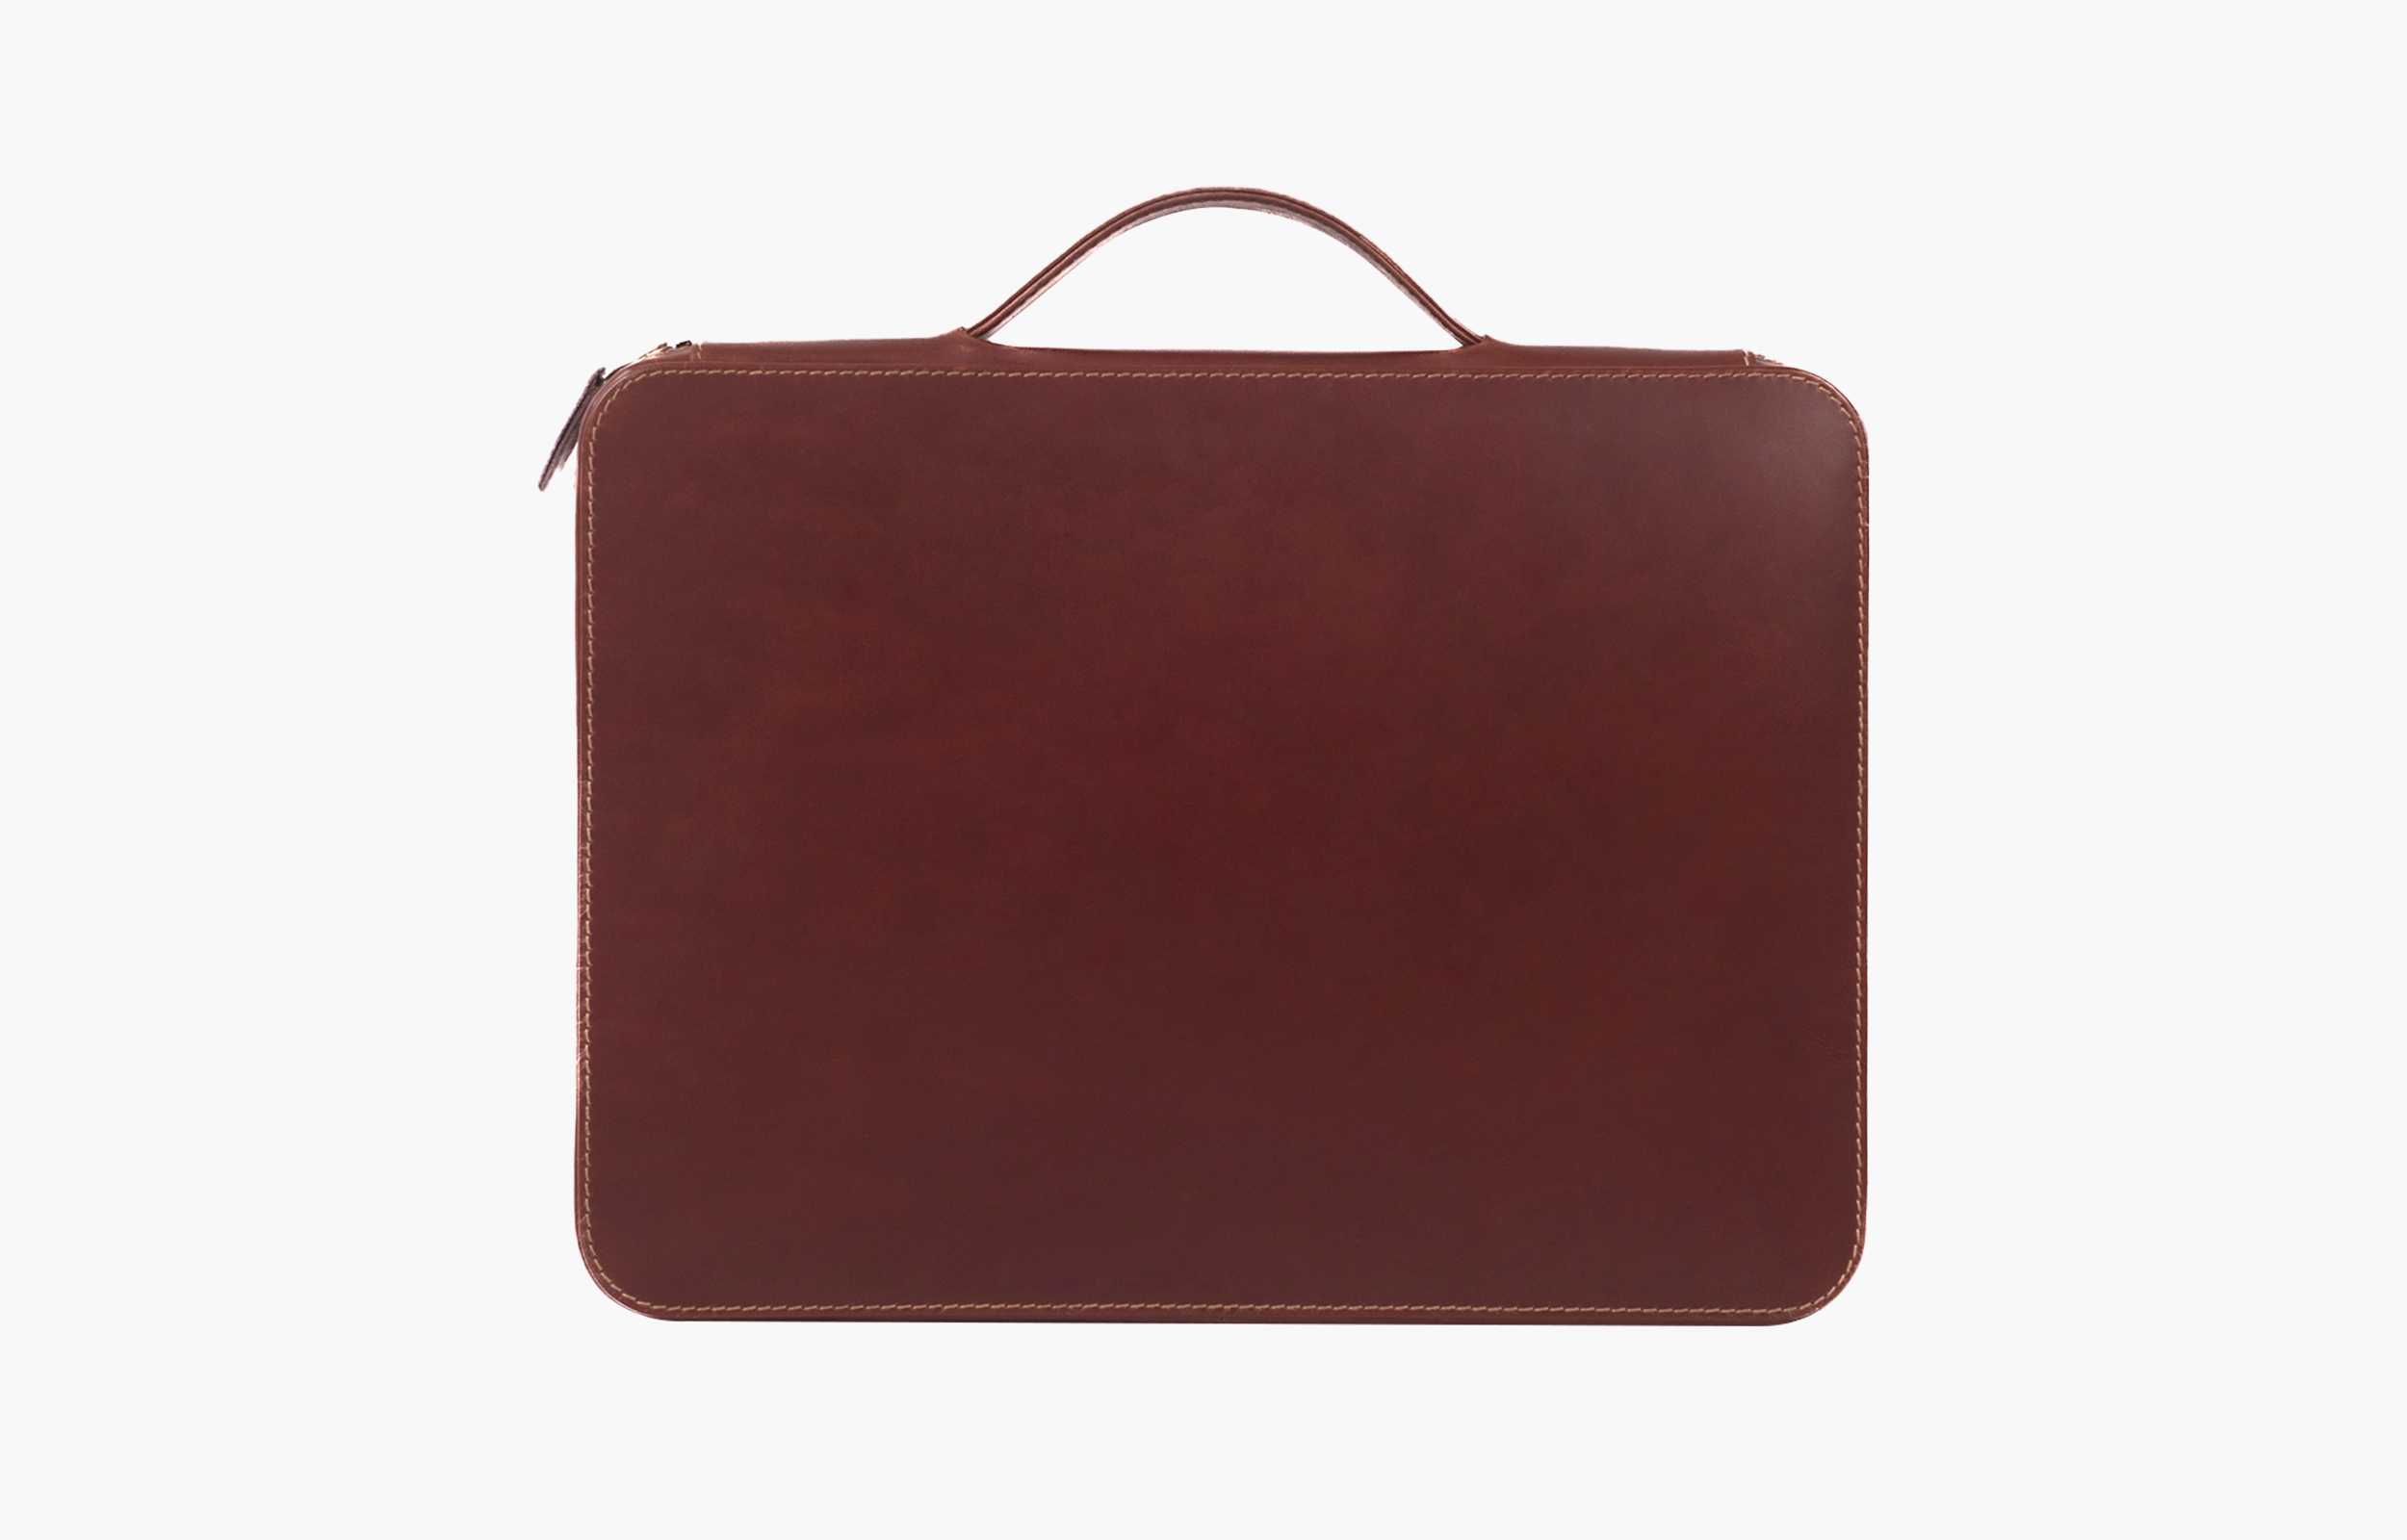 Porter Geneva Brown Leather Bag UK 8